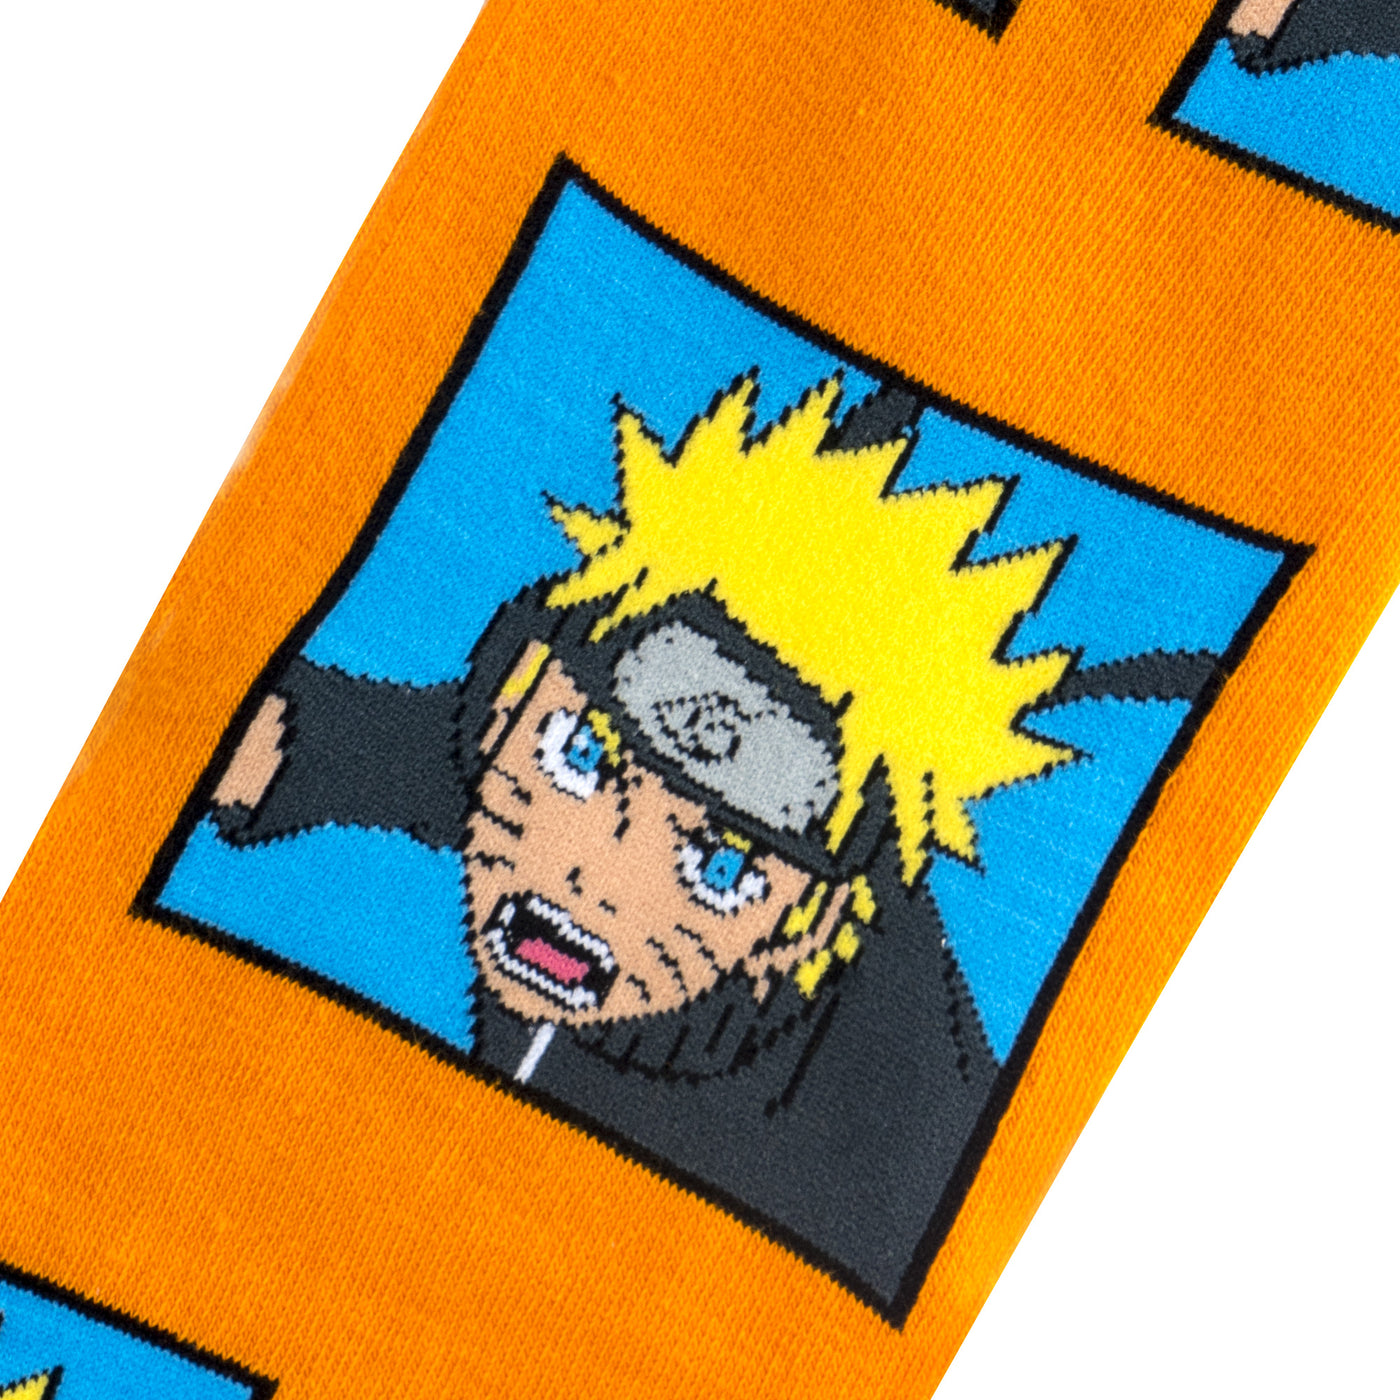 Naruto Heads Crew Socks